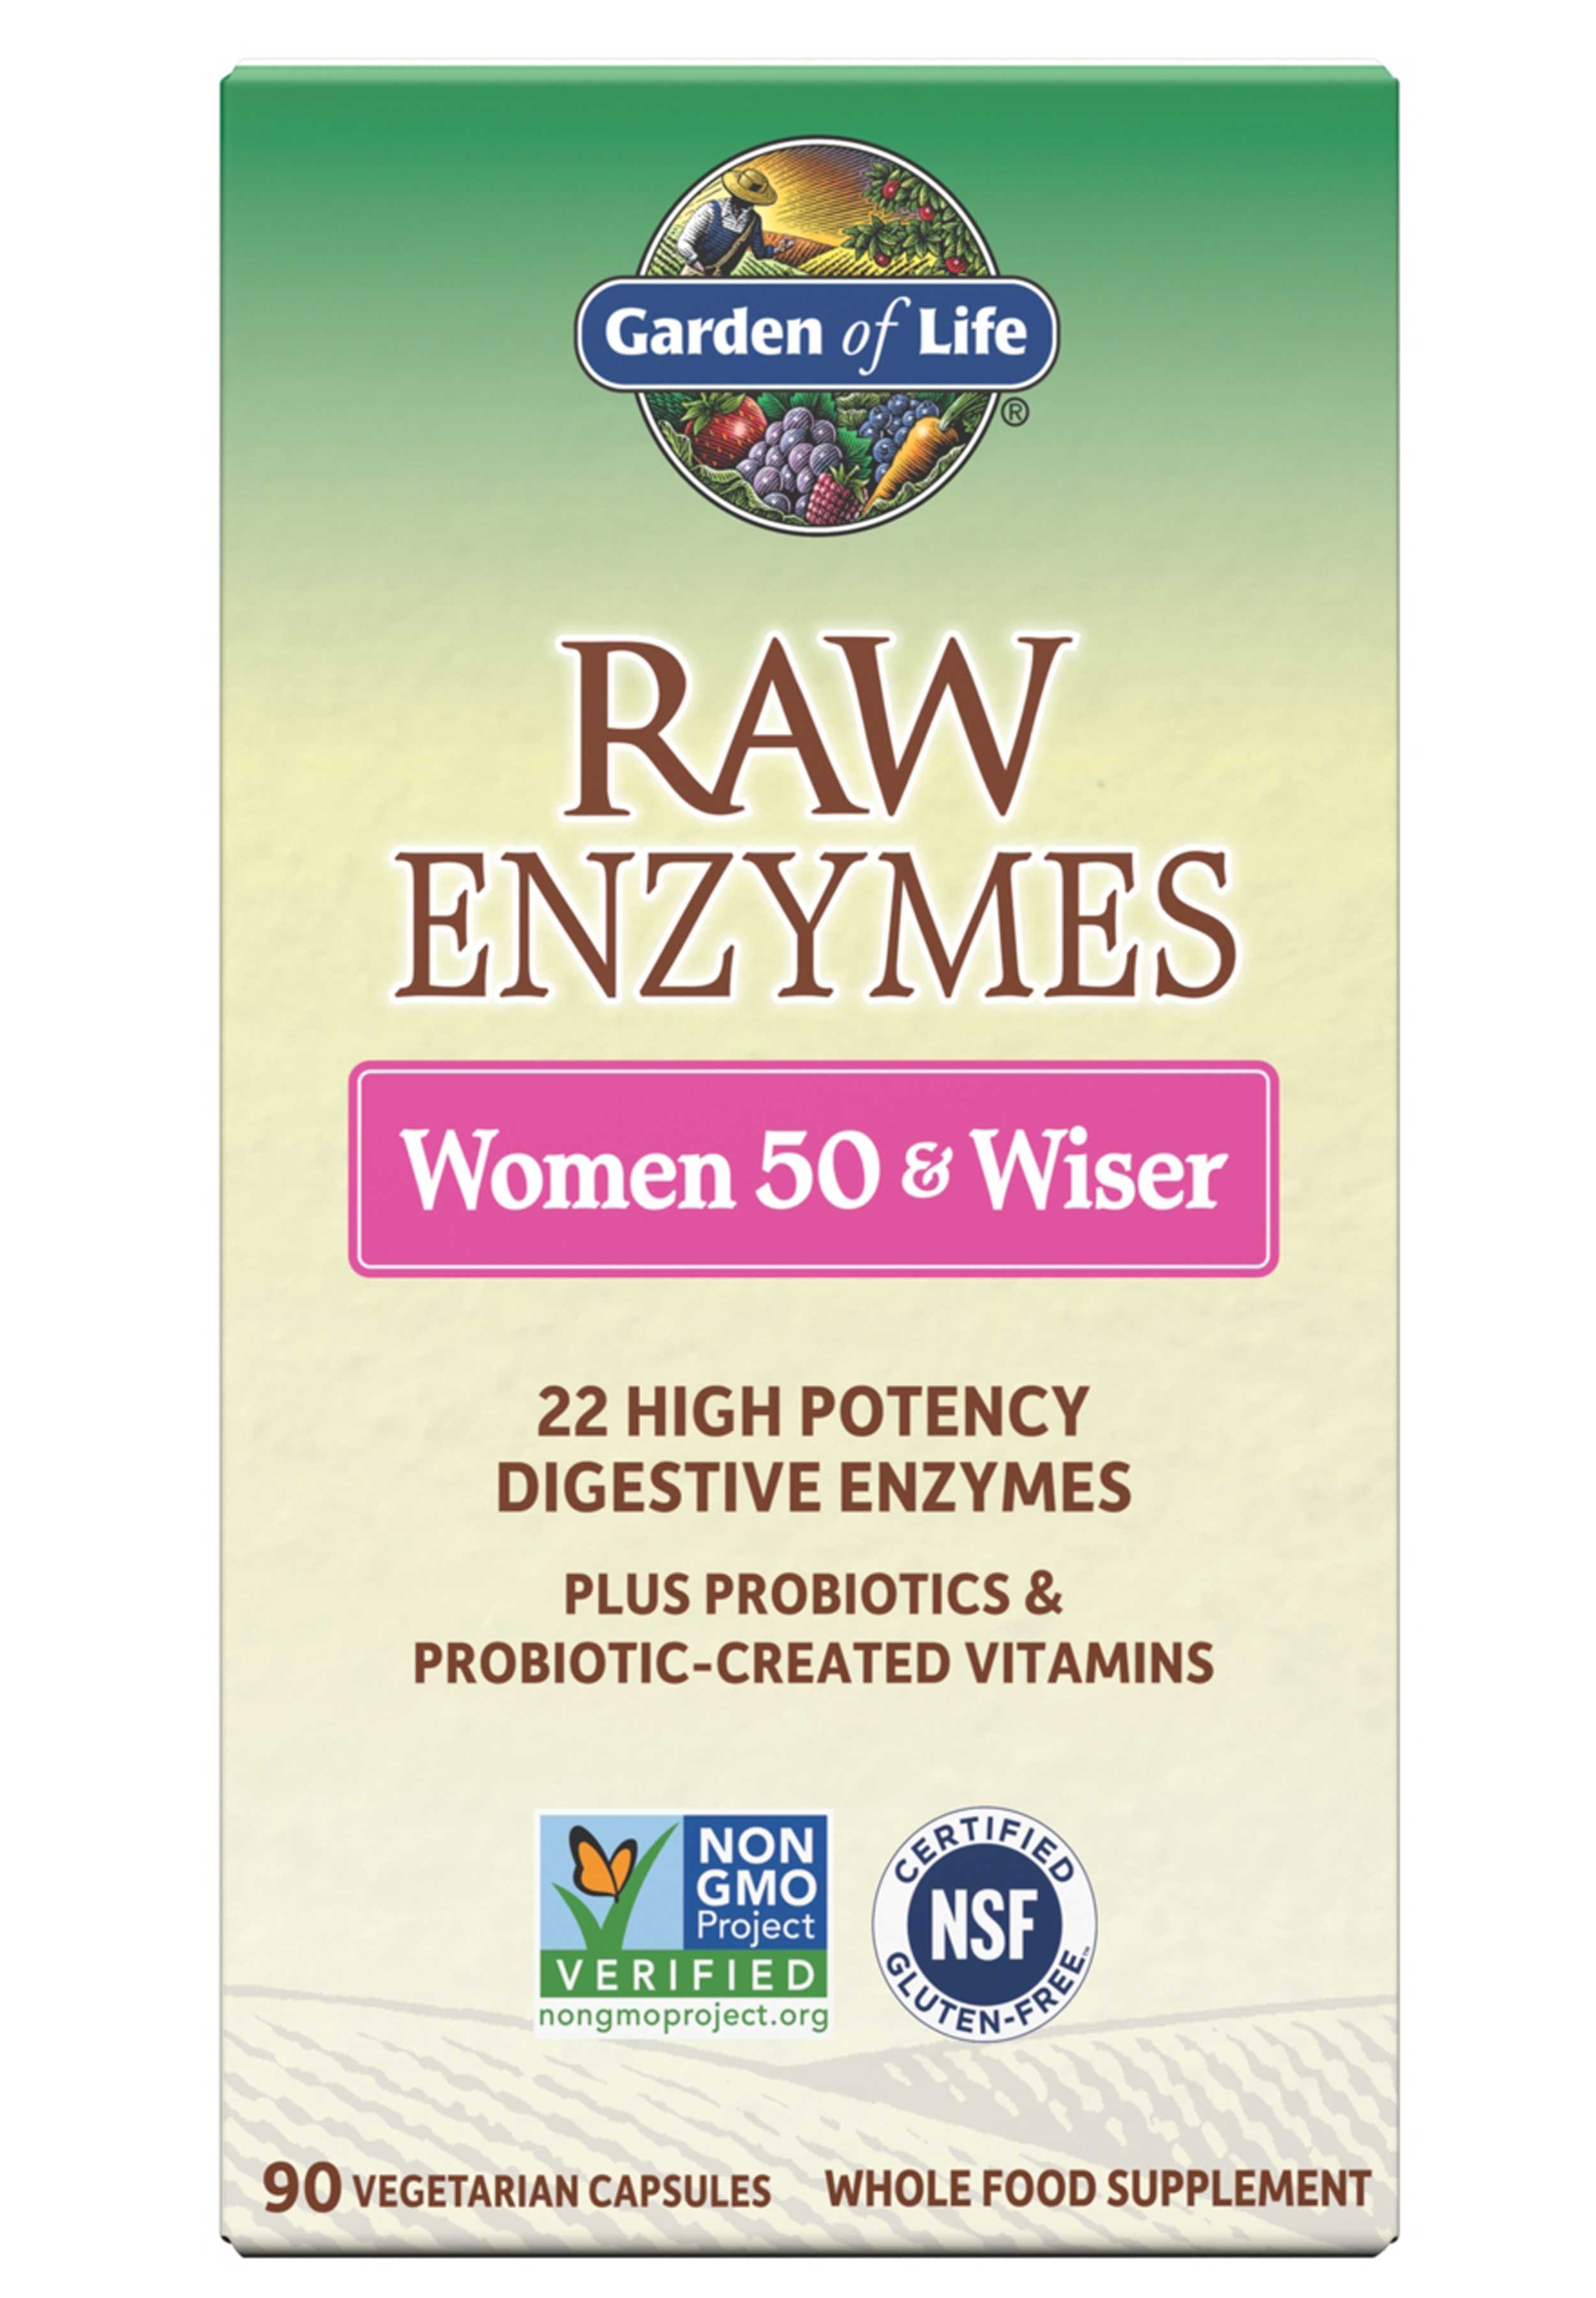 Garden of Life RAW Enzymes Women 50 & Wiser